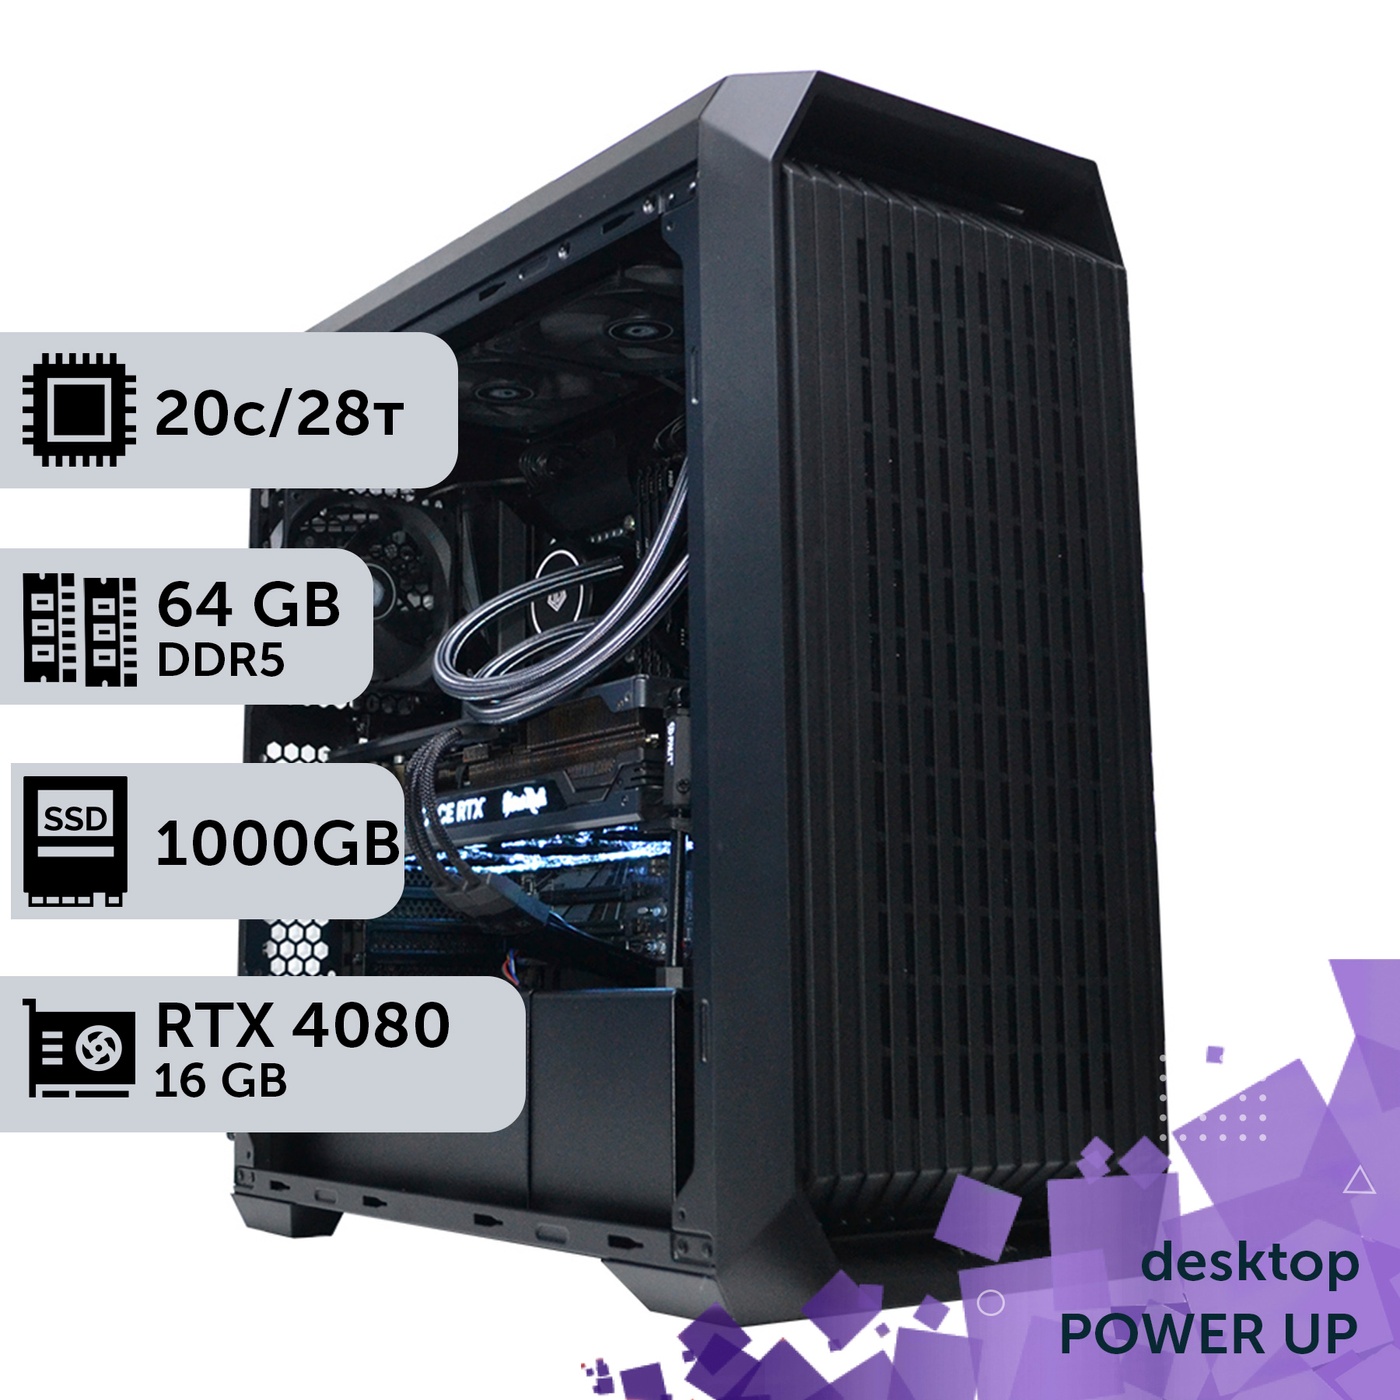 Рабочая станция PowerUp Desktop #356 Core i7 14700K/64 GB/SSD 1TB/GeForce RTX 4080 16GB